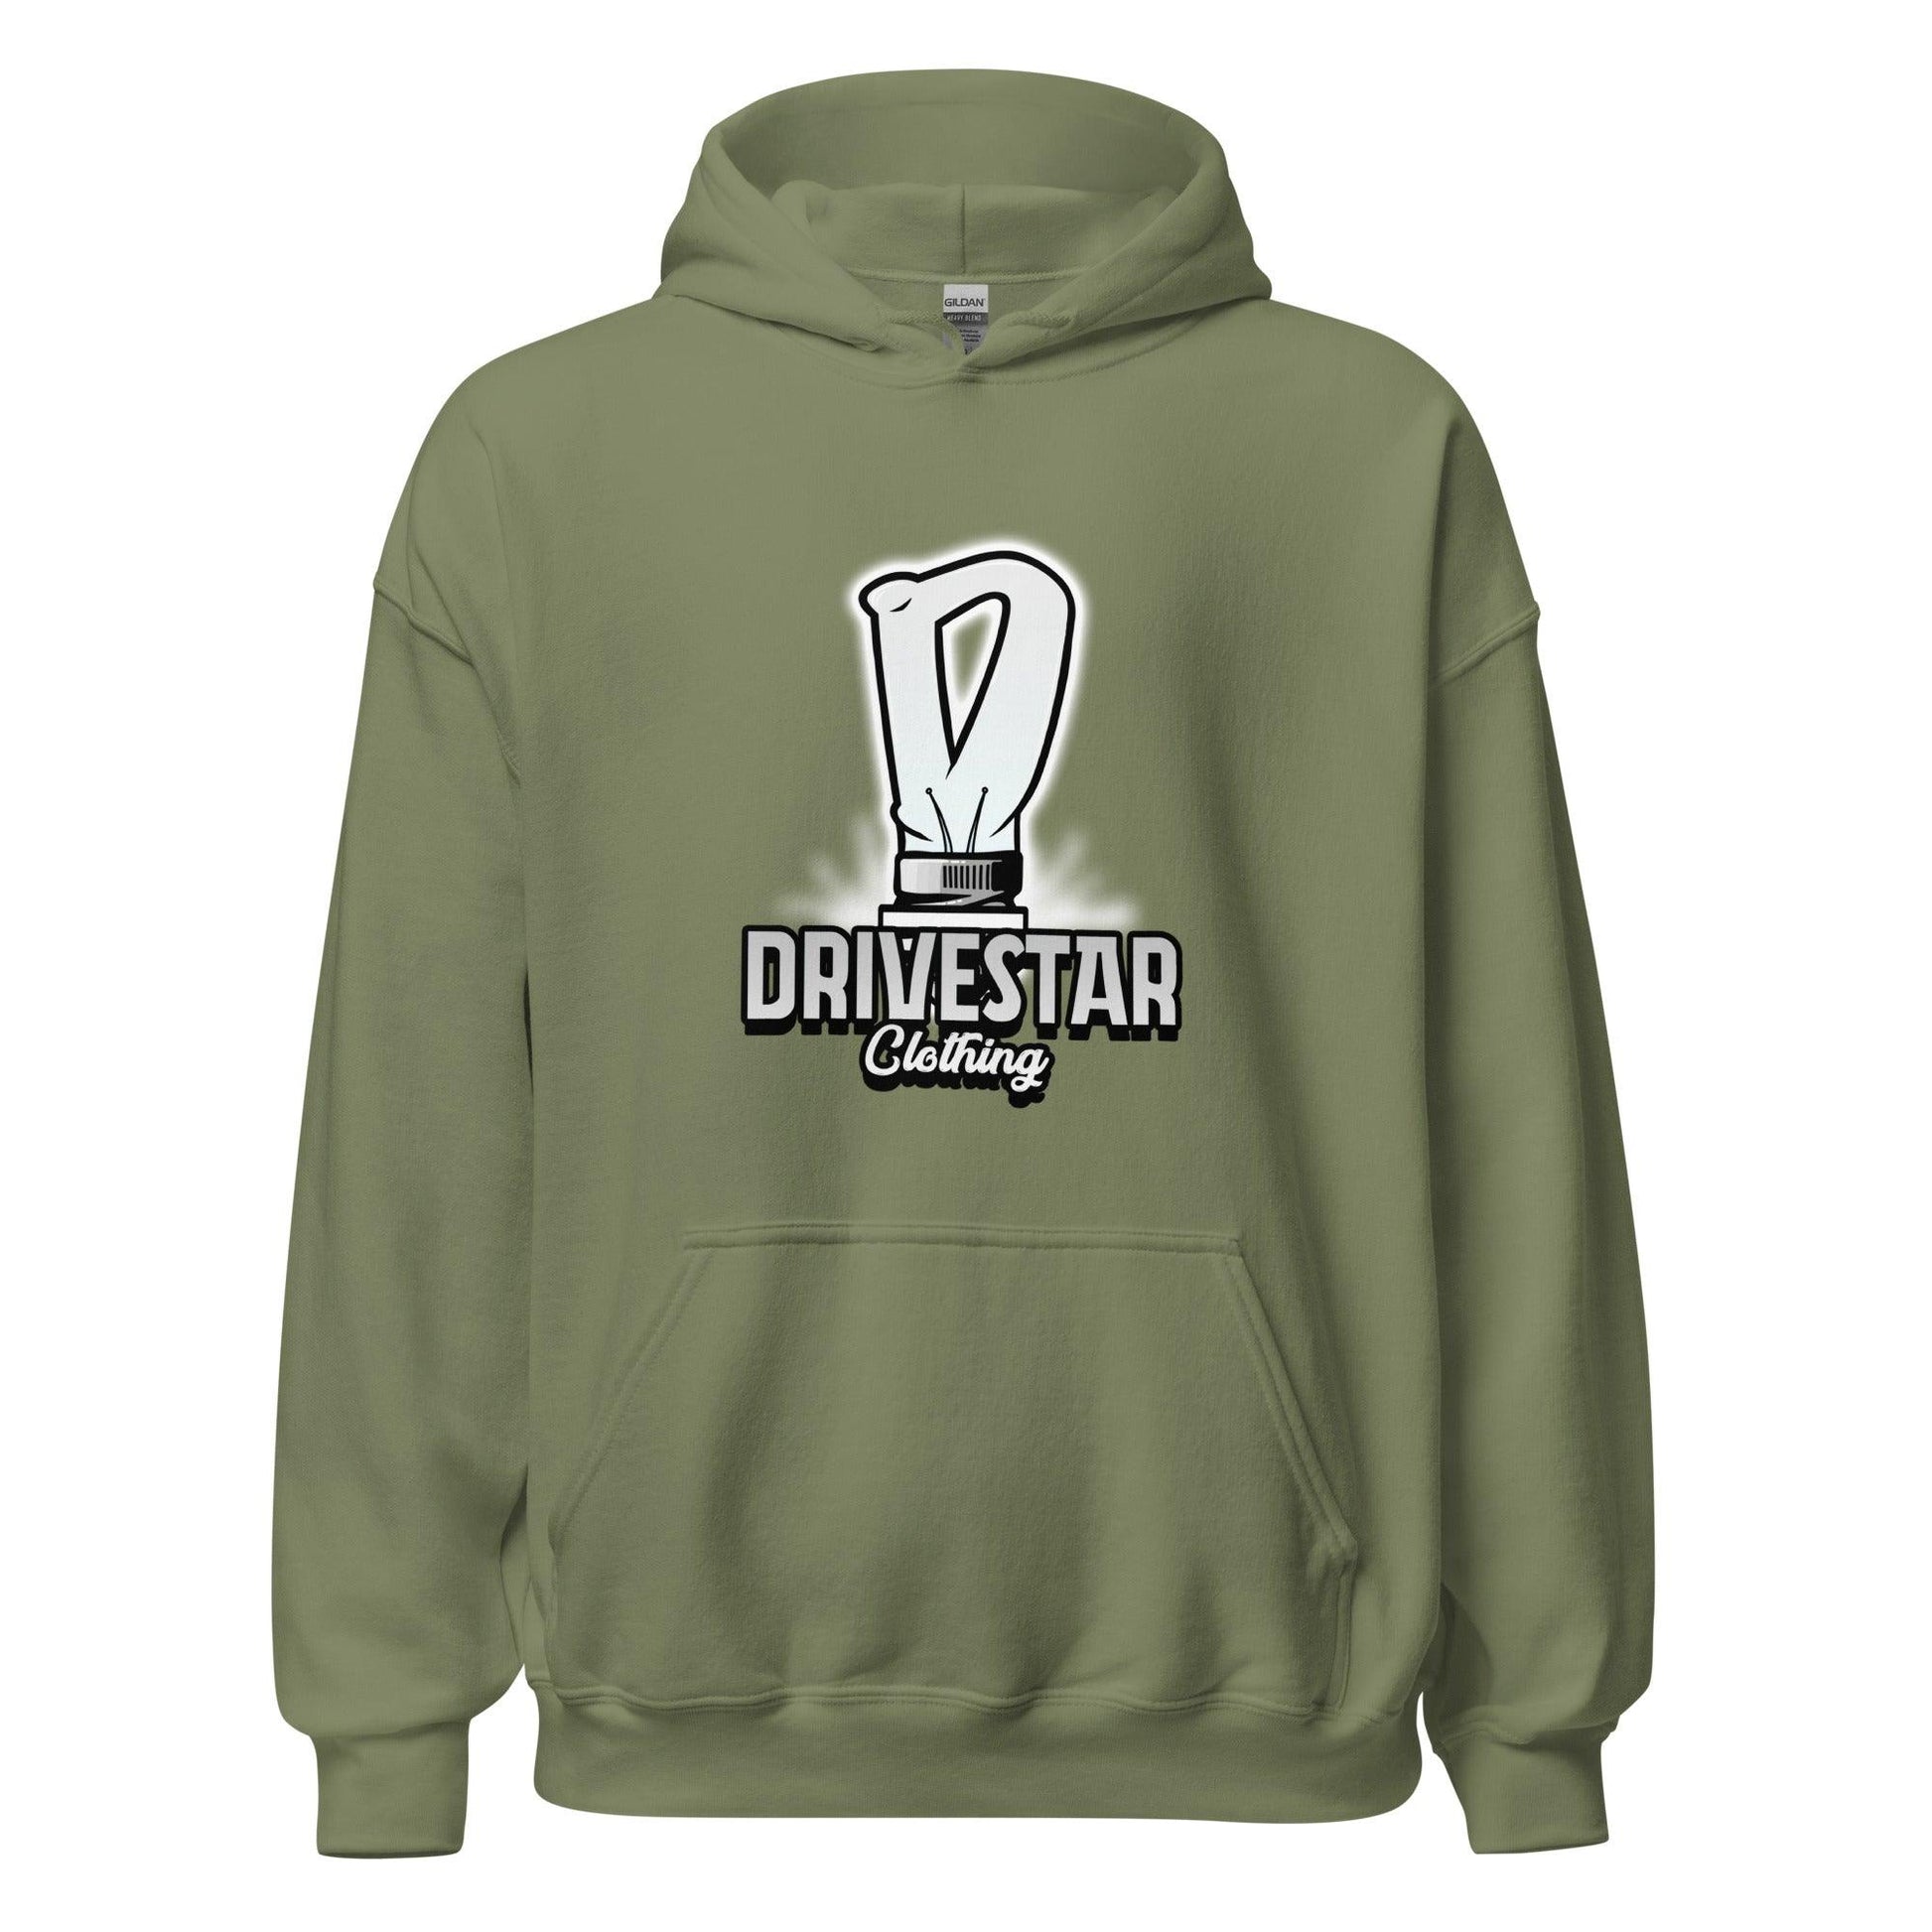 The Drivestar Hoodie - Drivestar Clothing